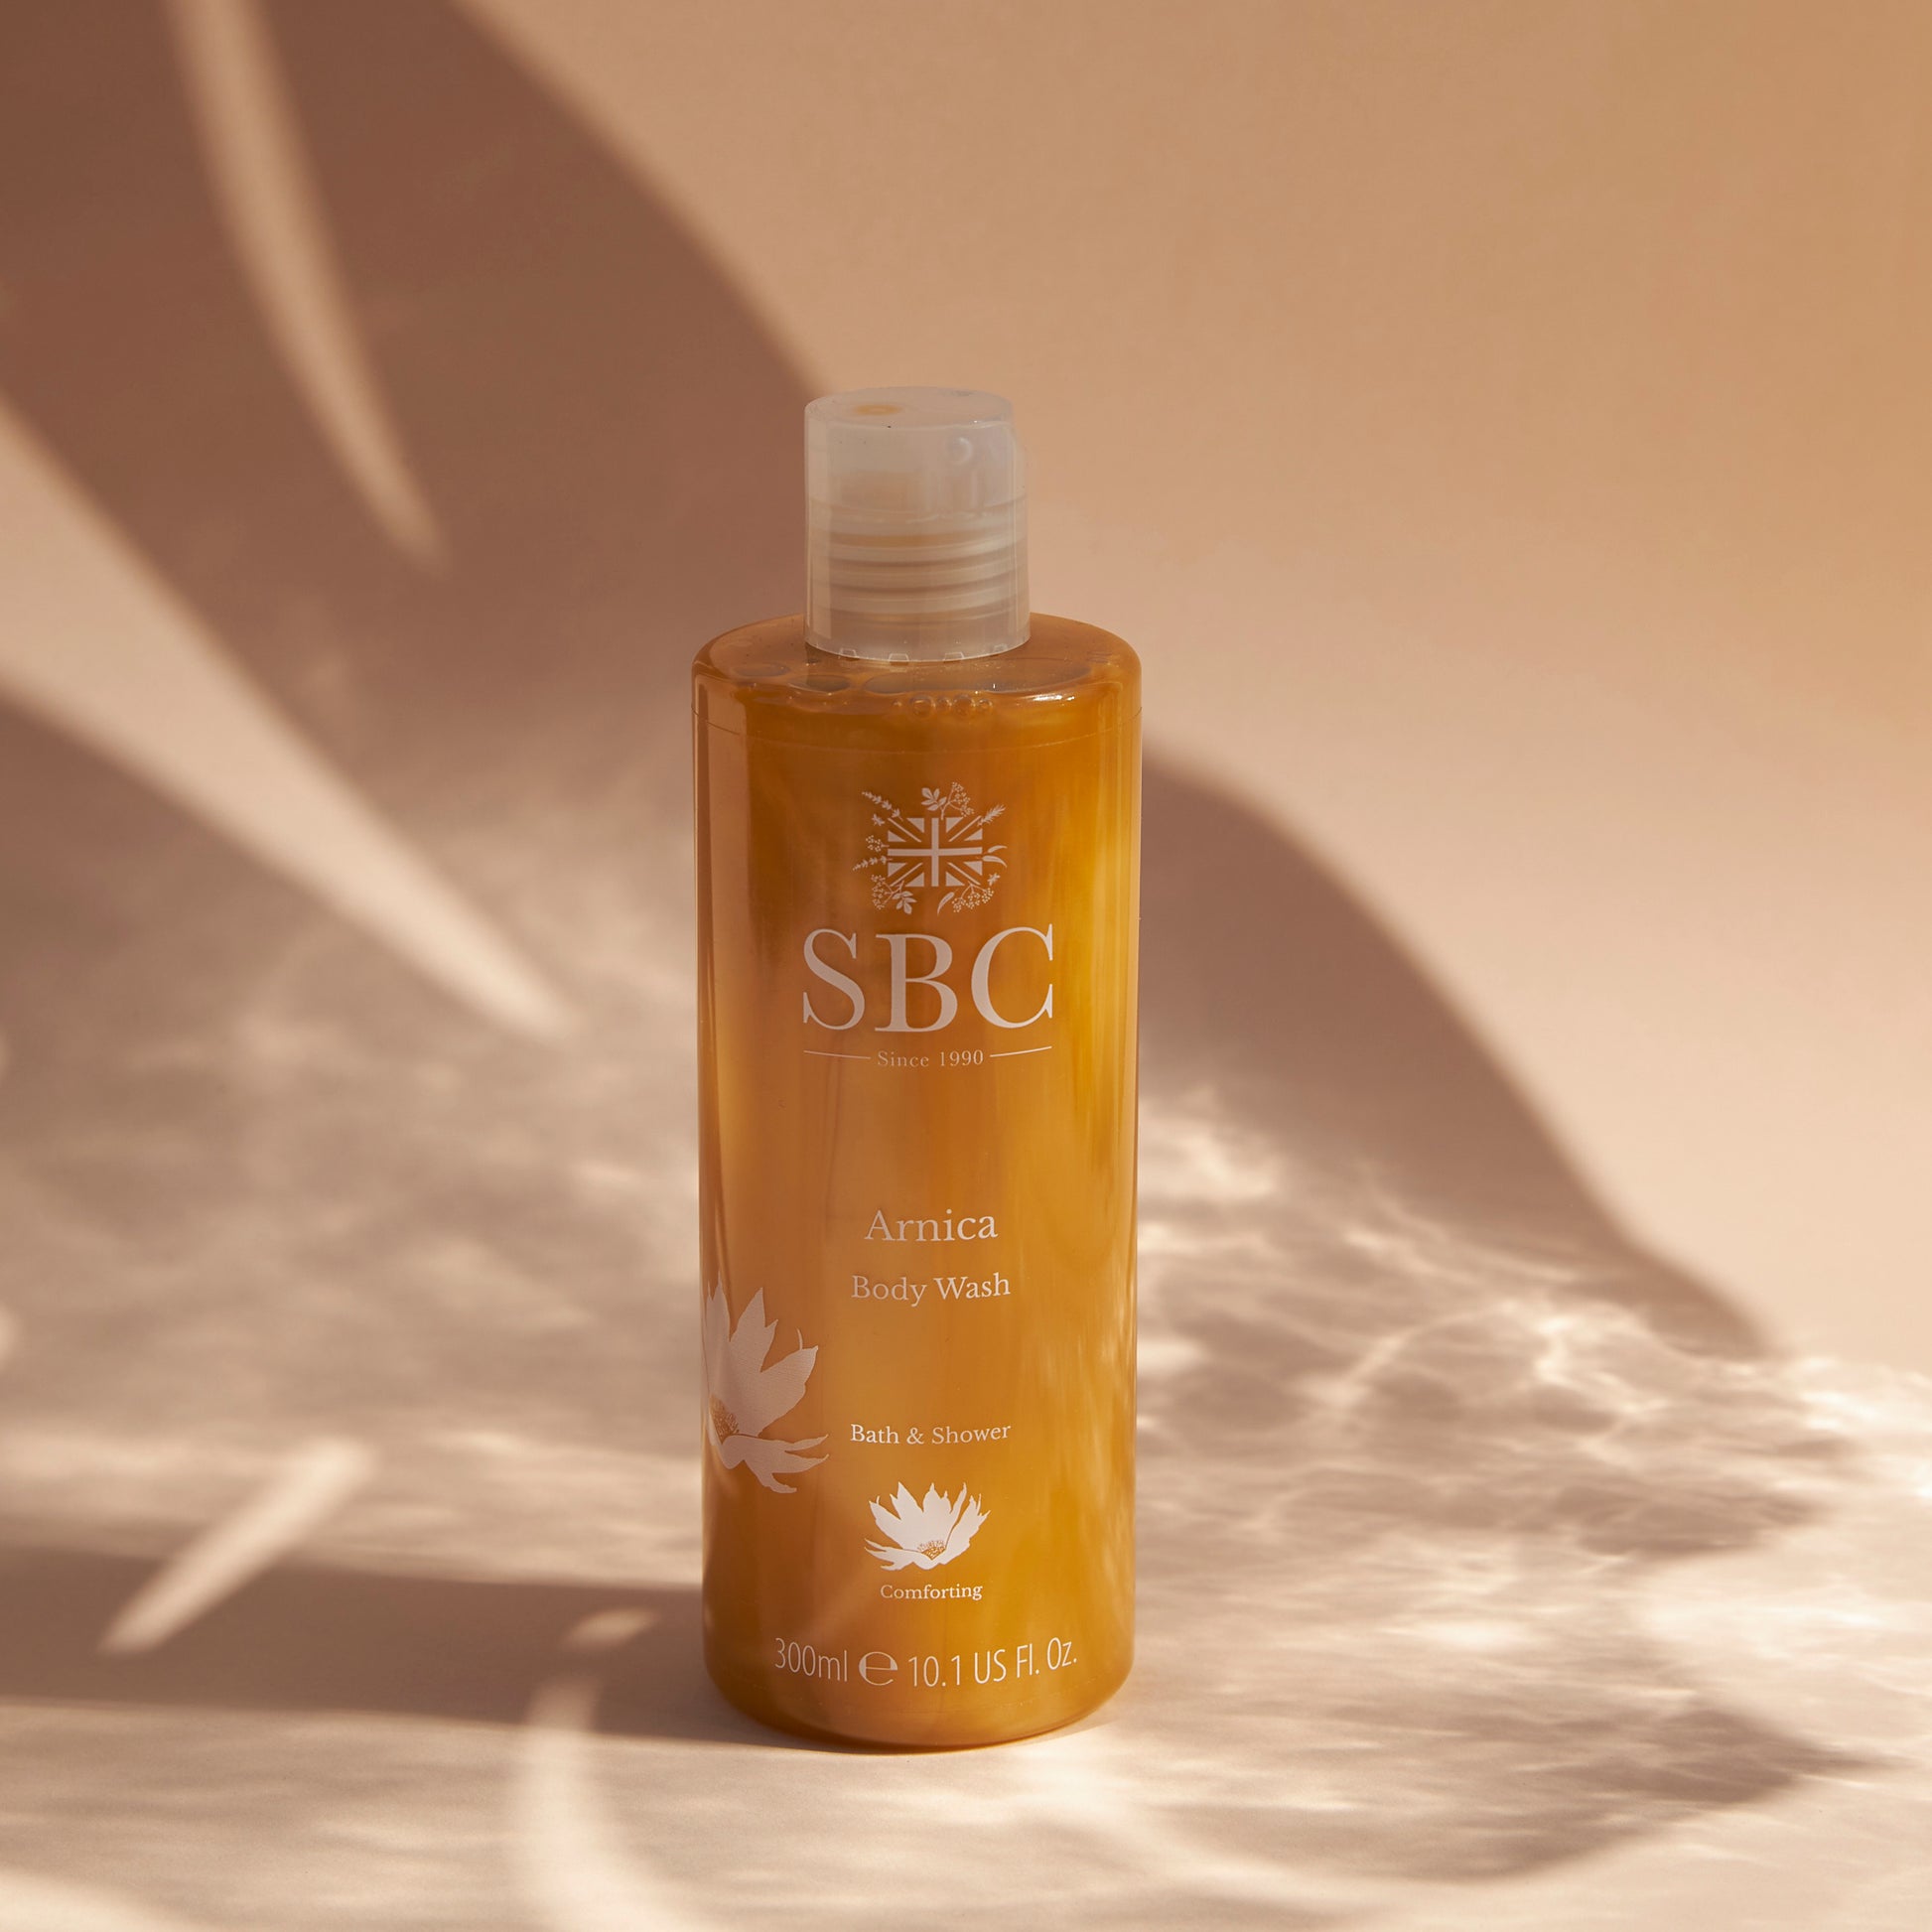 SBC Skincare Arnica Body Wash with shadows